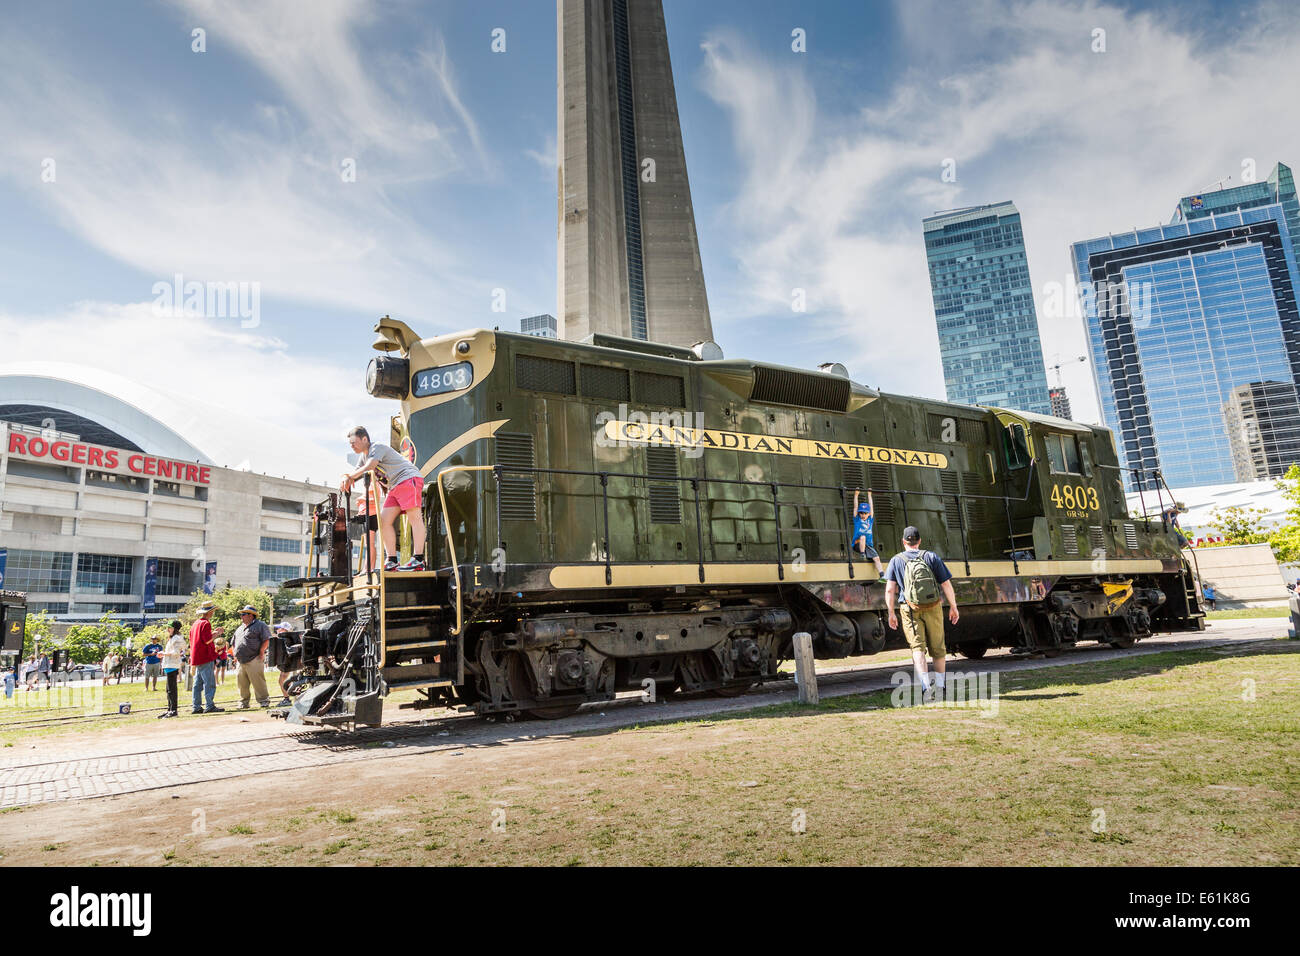 Il Canadian National treno sul display in Toronto, Ontario, Canada, America del Nord. Foto Stock